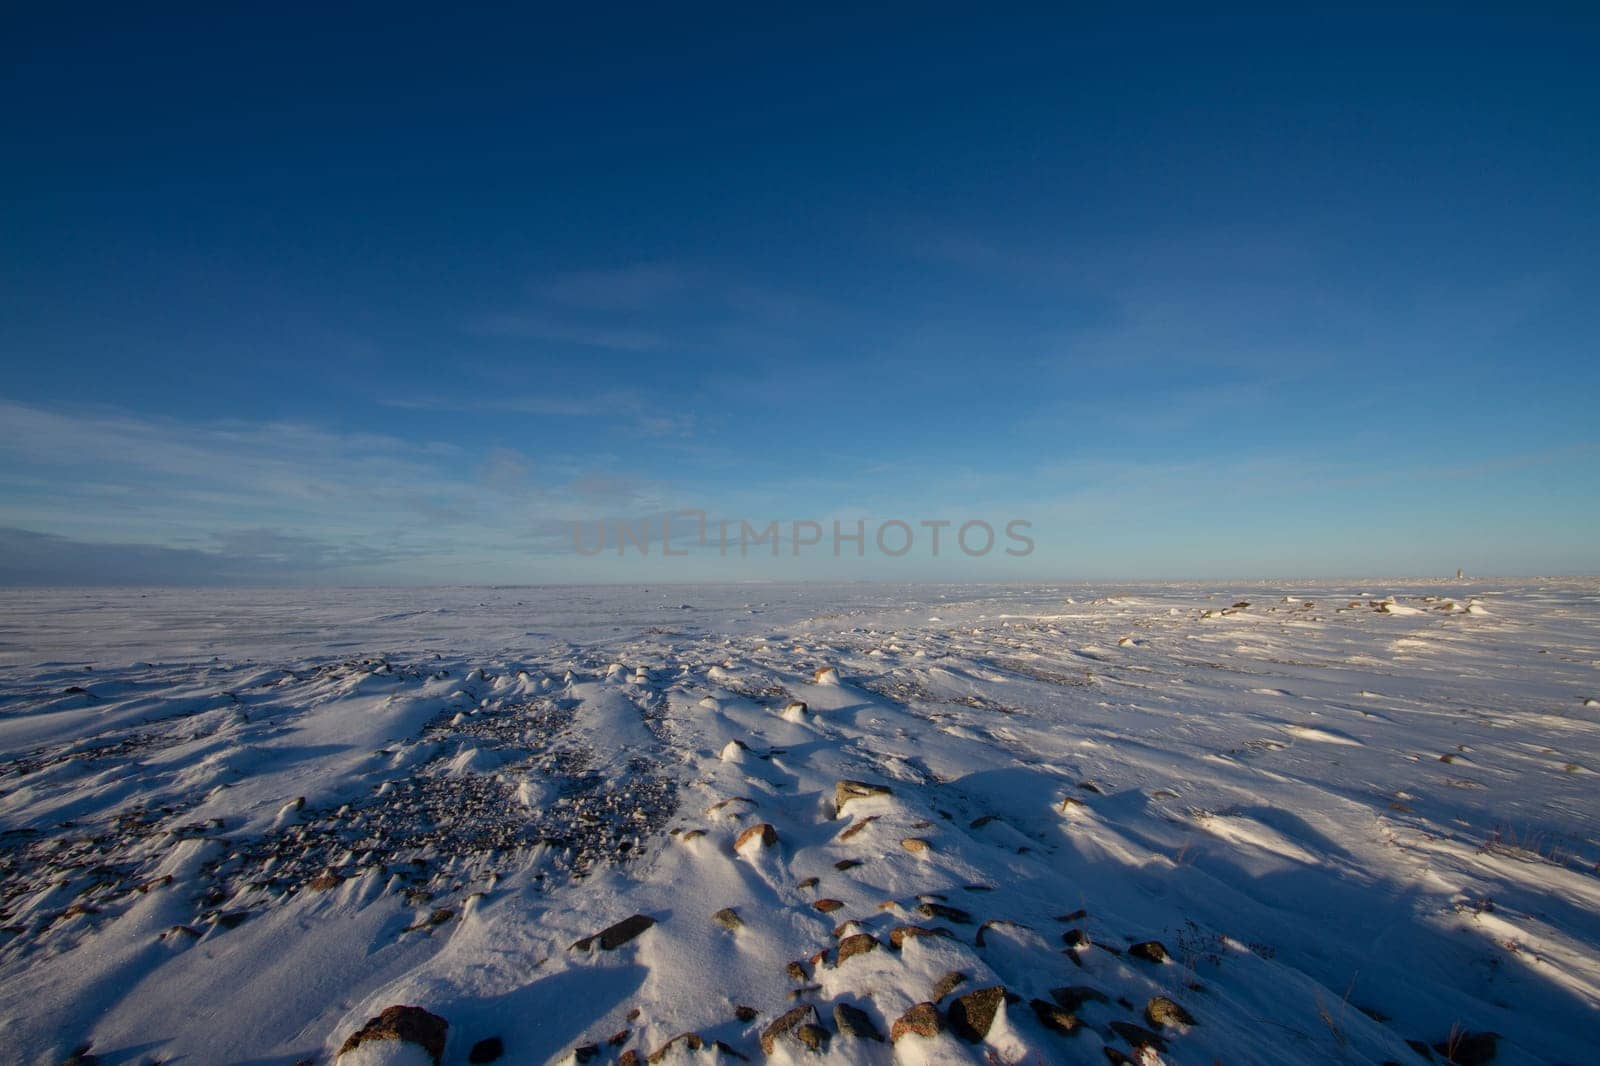 Frozen arctic landscape with snow on the ground near Arviat, Nunavut, Canada